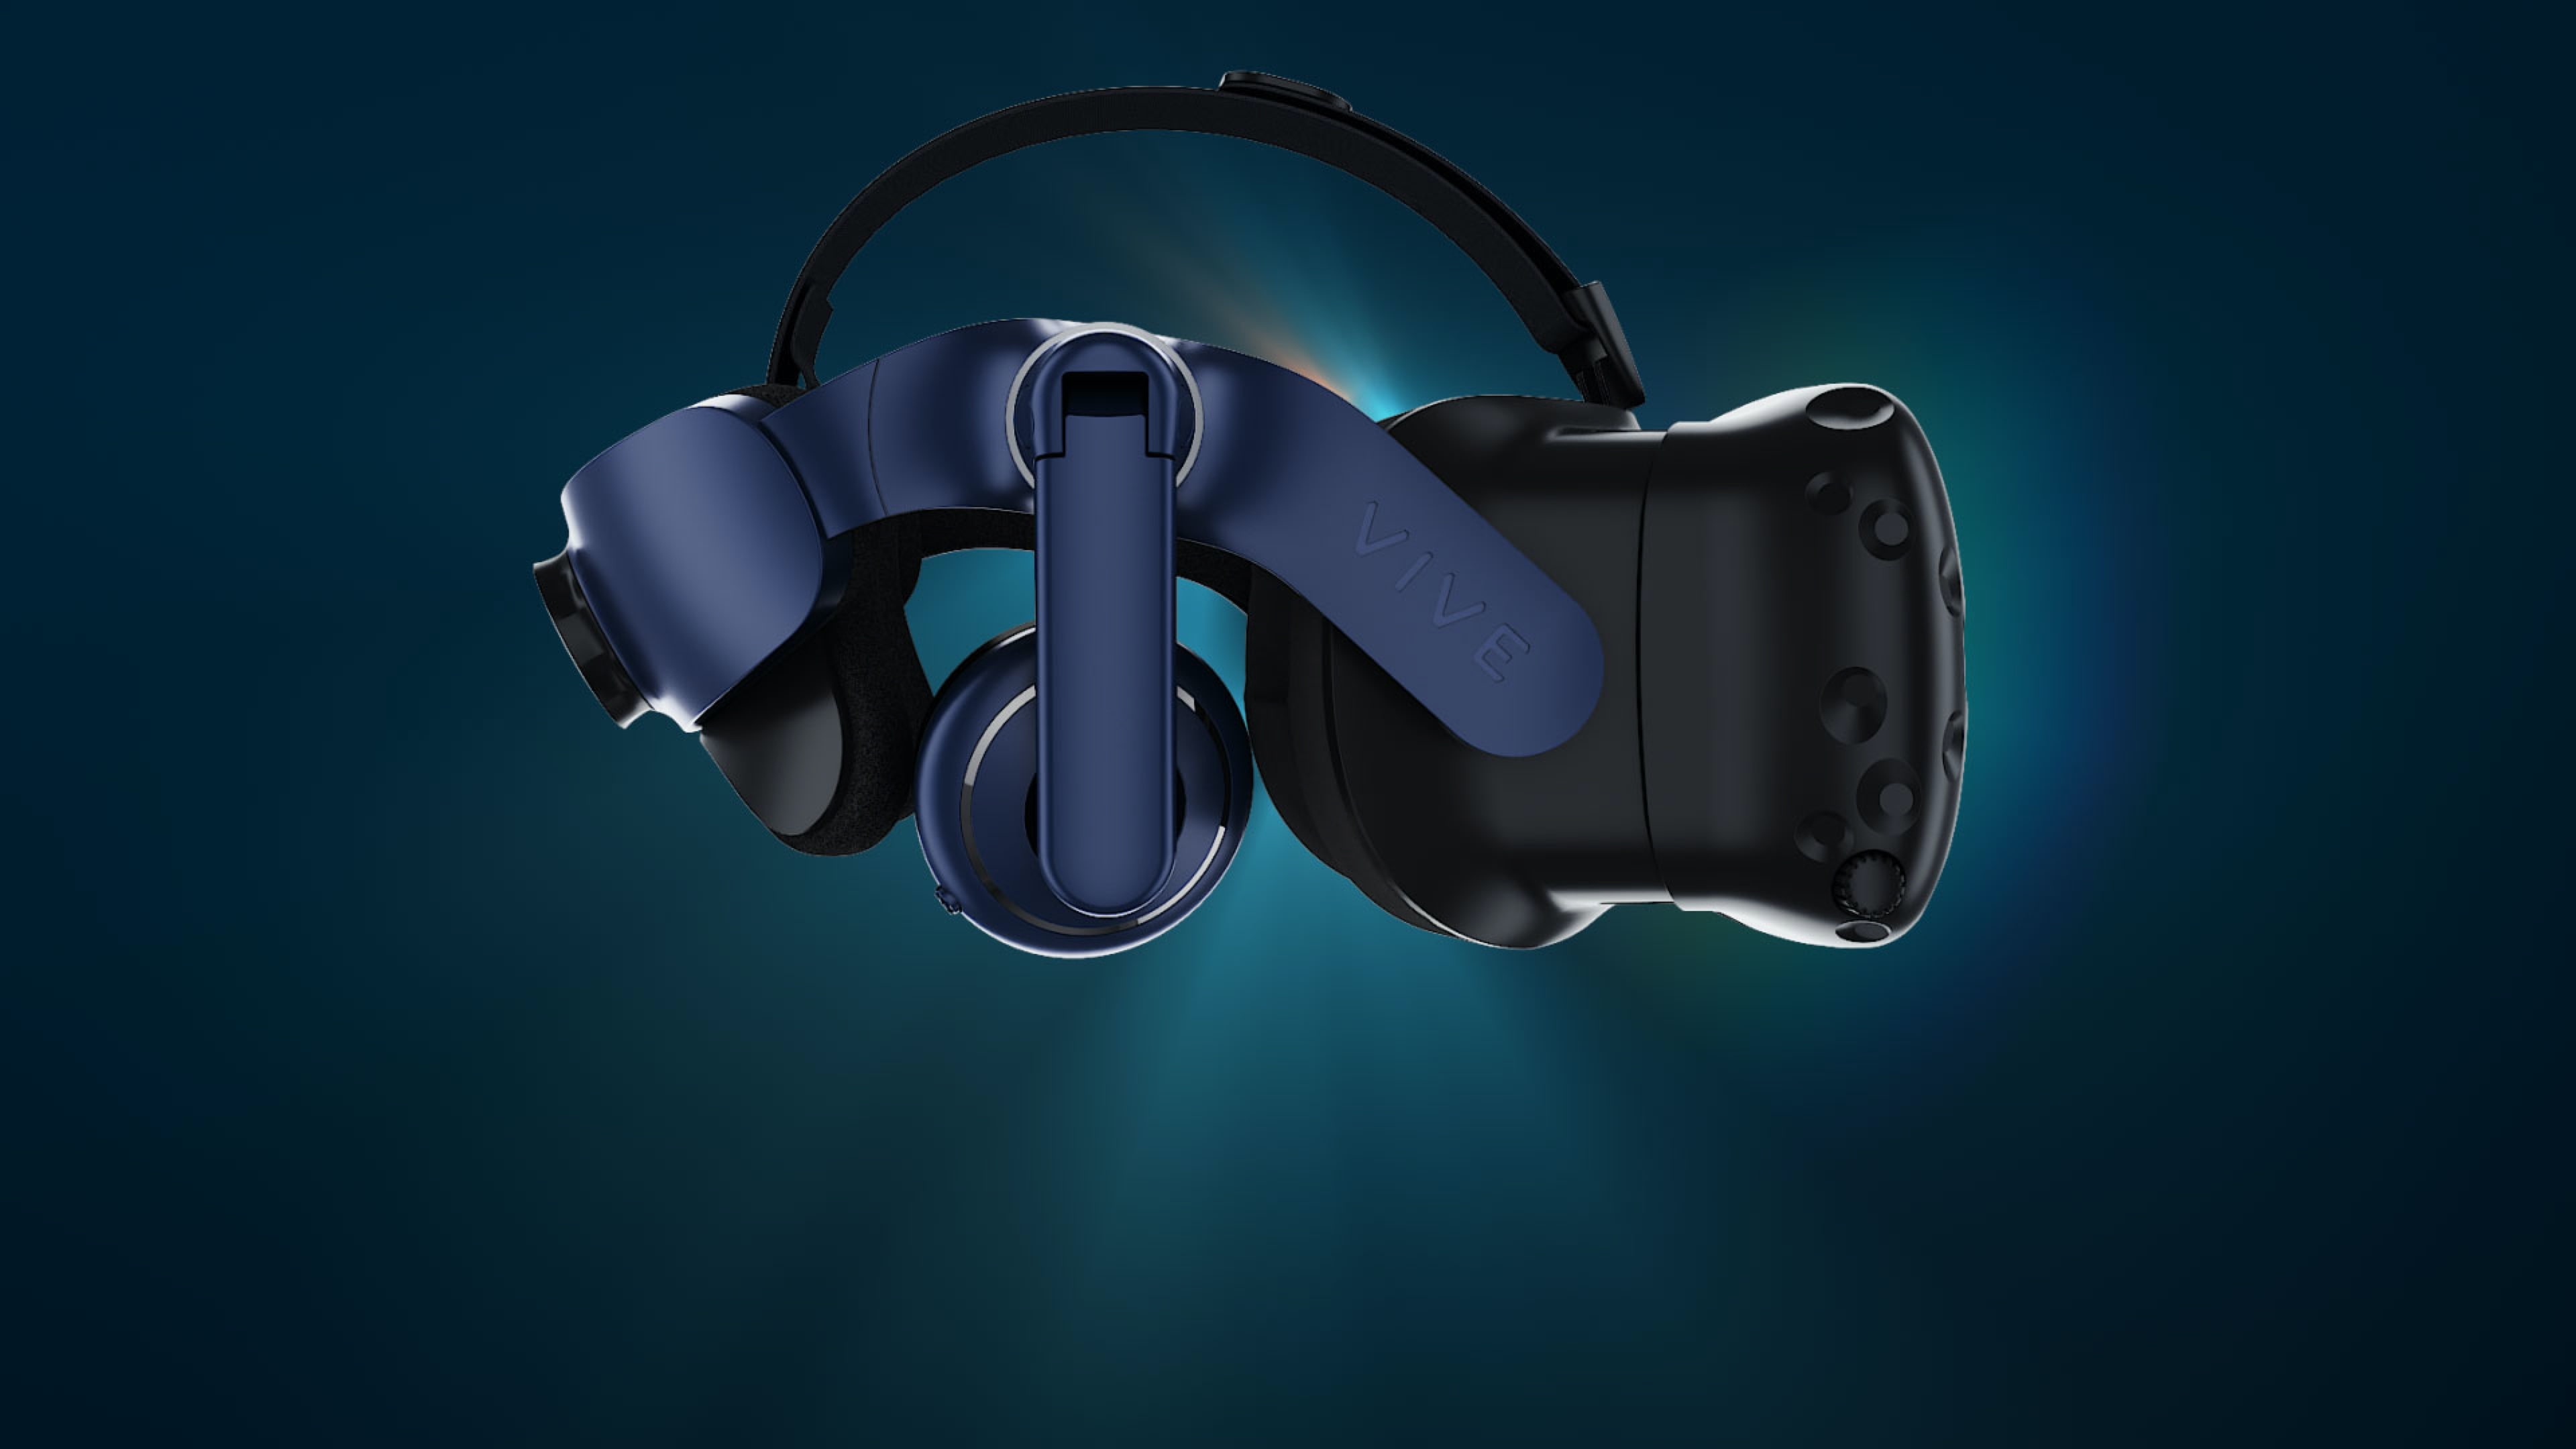 HTC VIVE PRO 2 HMD - Gafas VR